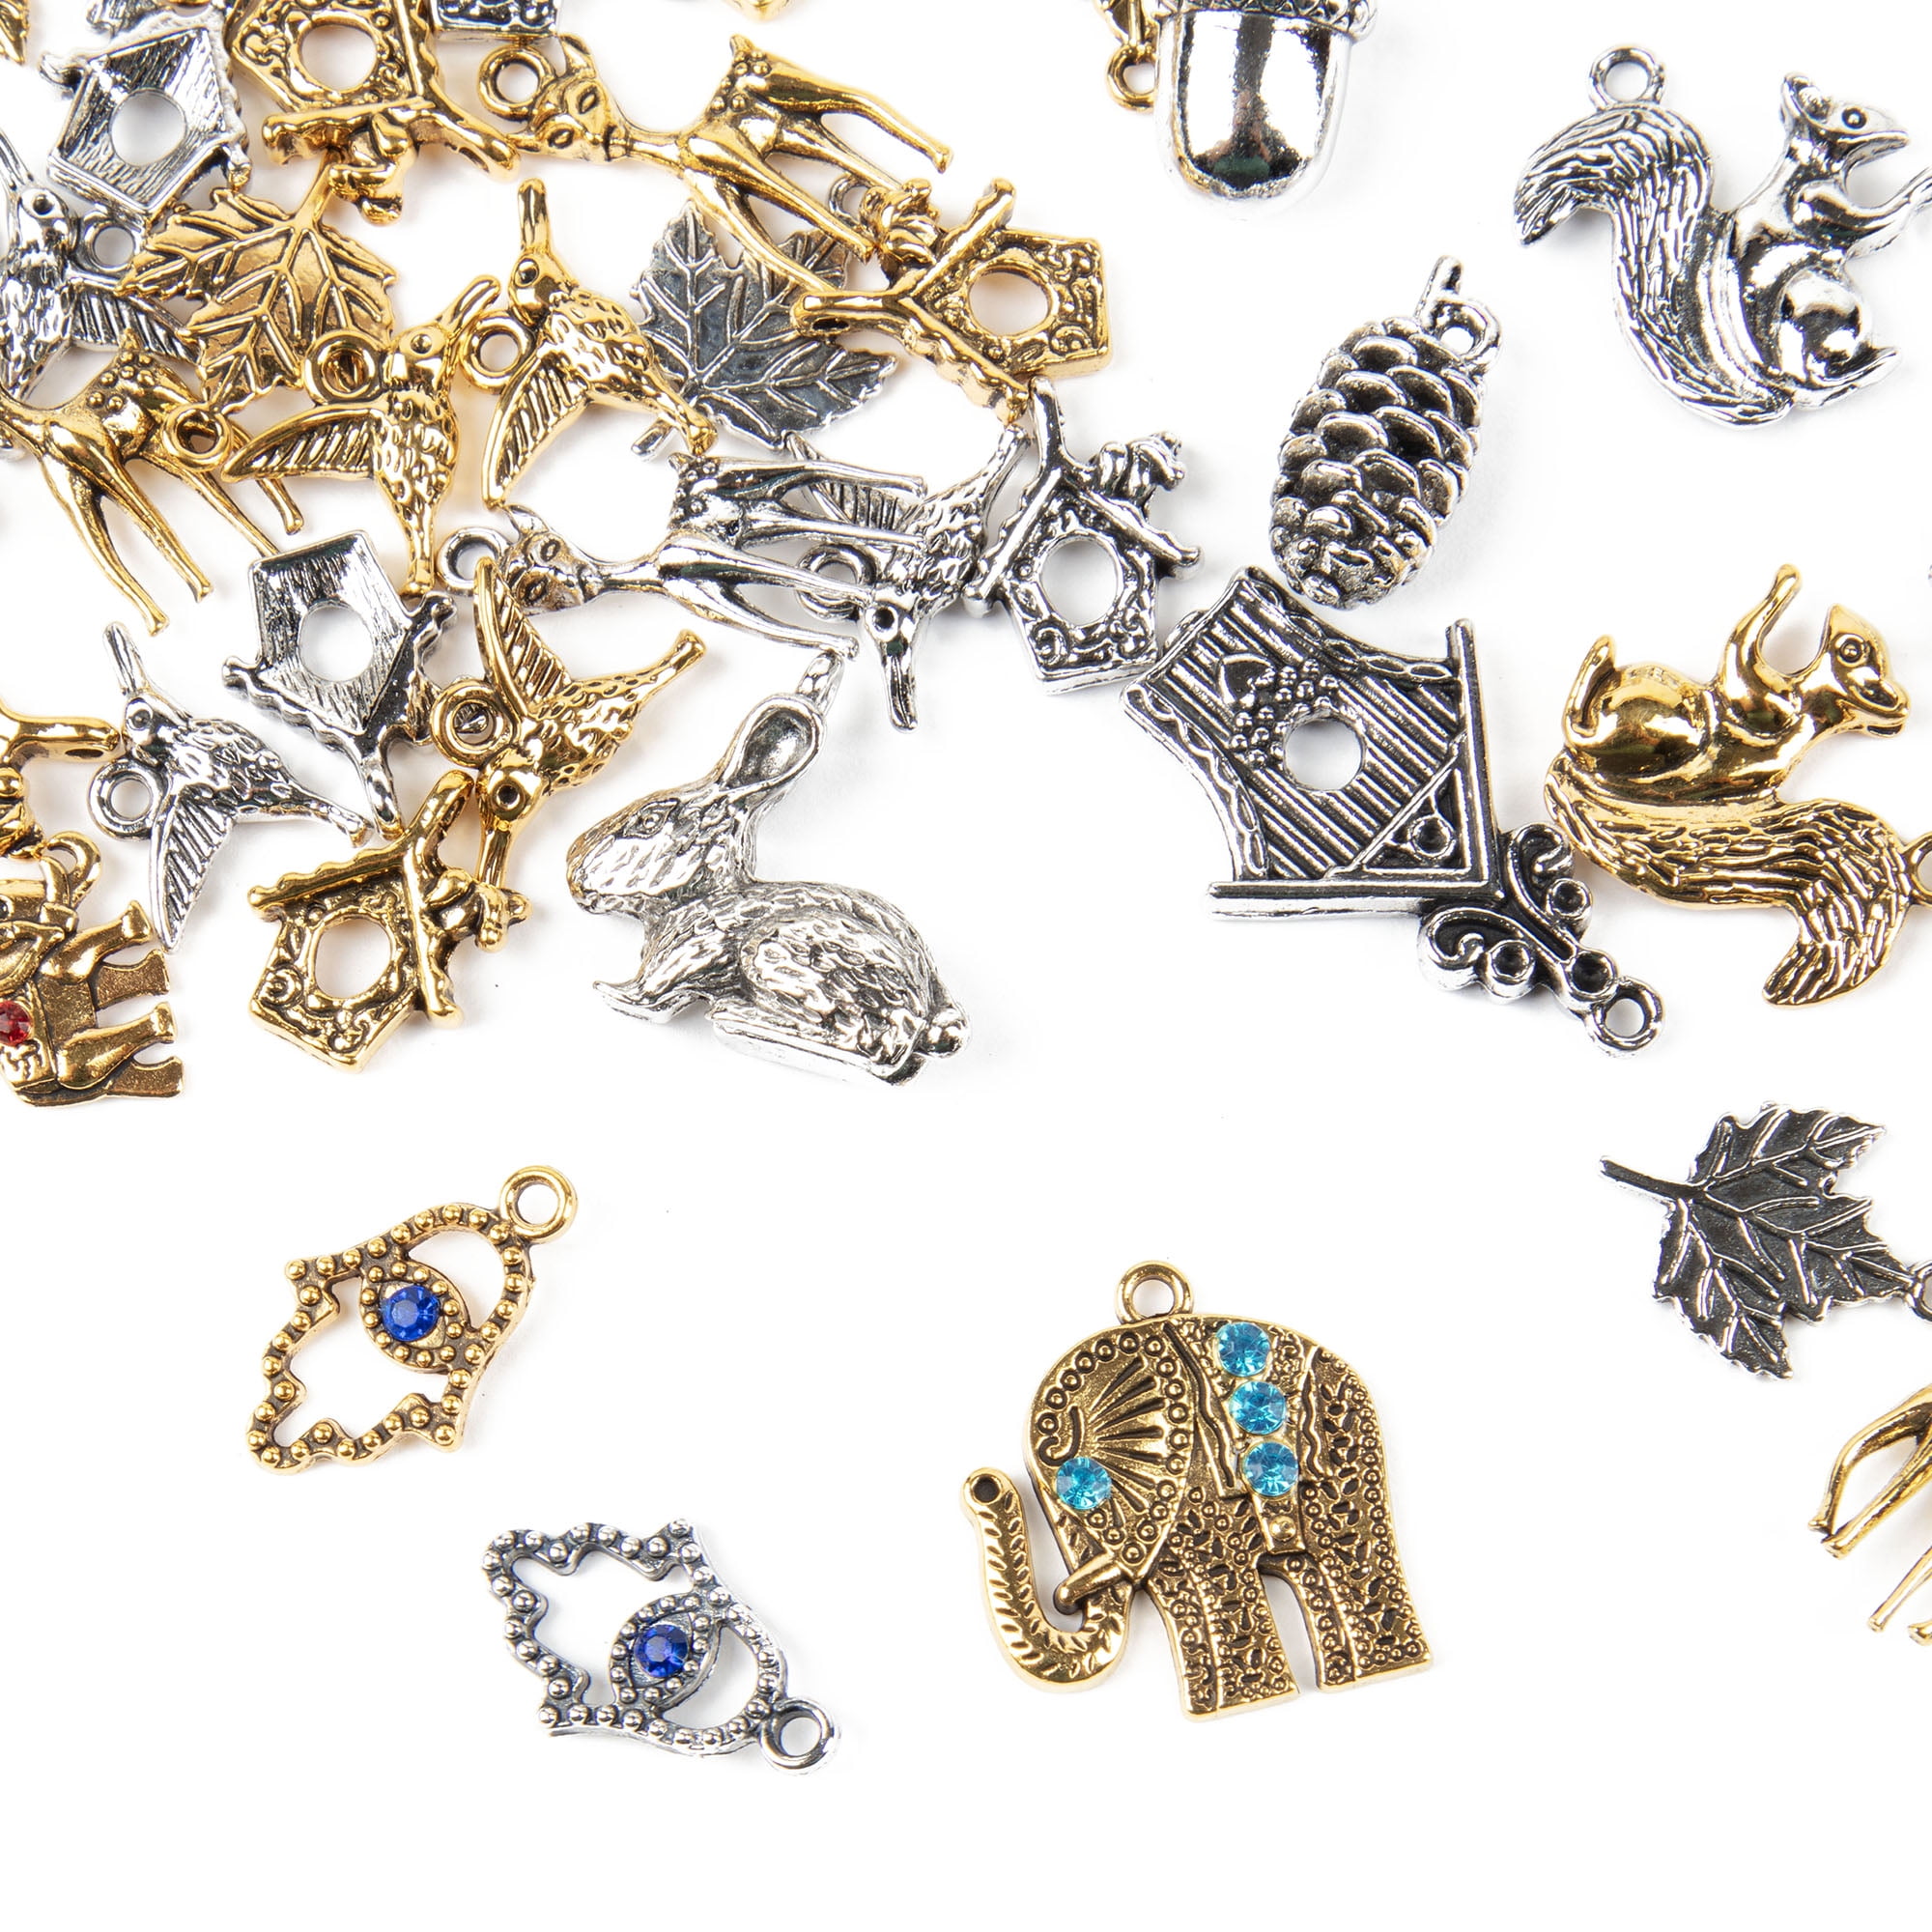 BULK 50 Goddess Silver Tone Charms Jewelry Making Supply DIY Crafts